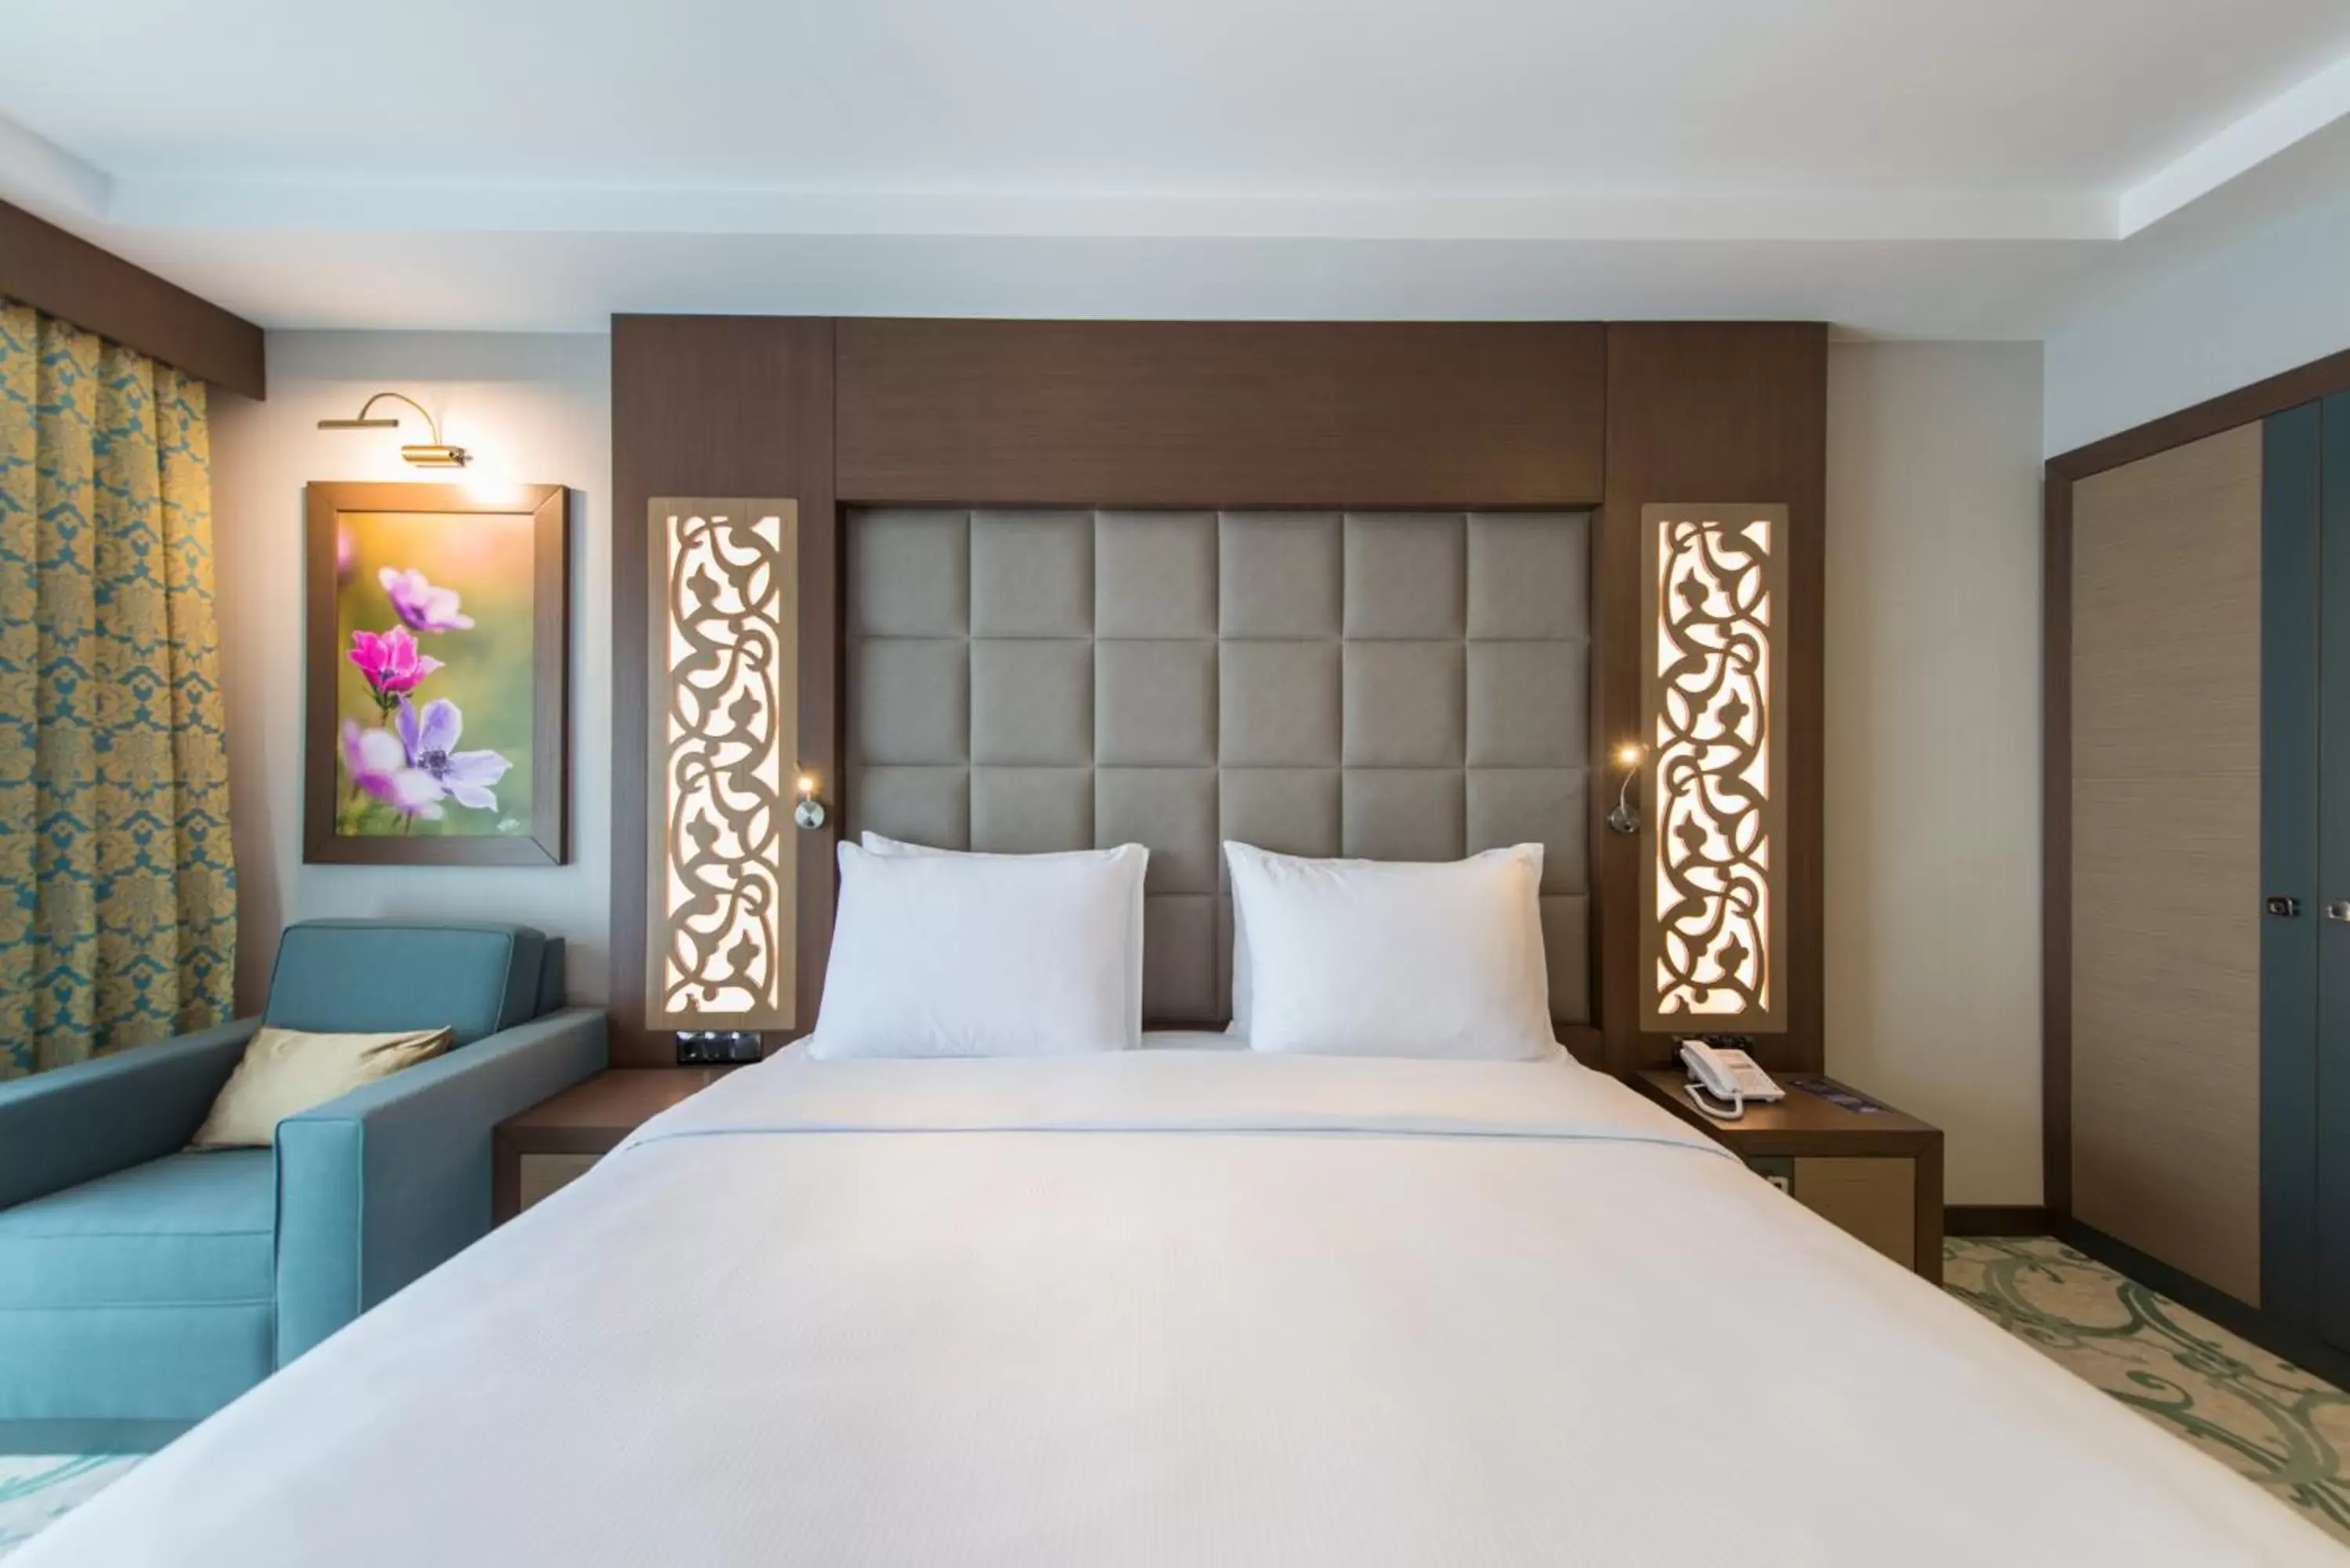 Bed, Room Photo in Radisson Blu Hotel, Ordu